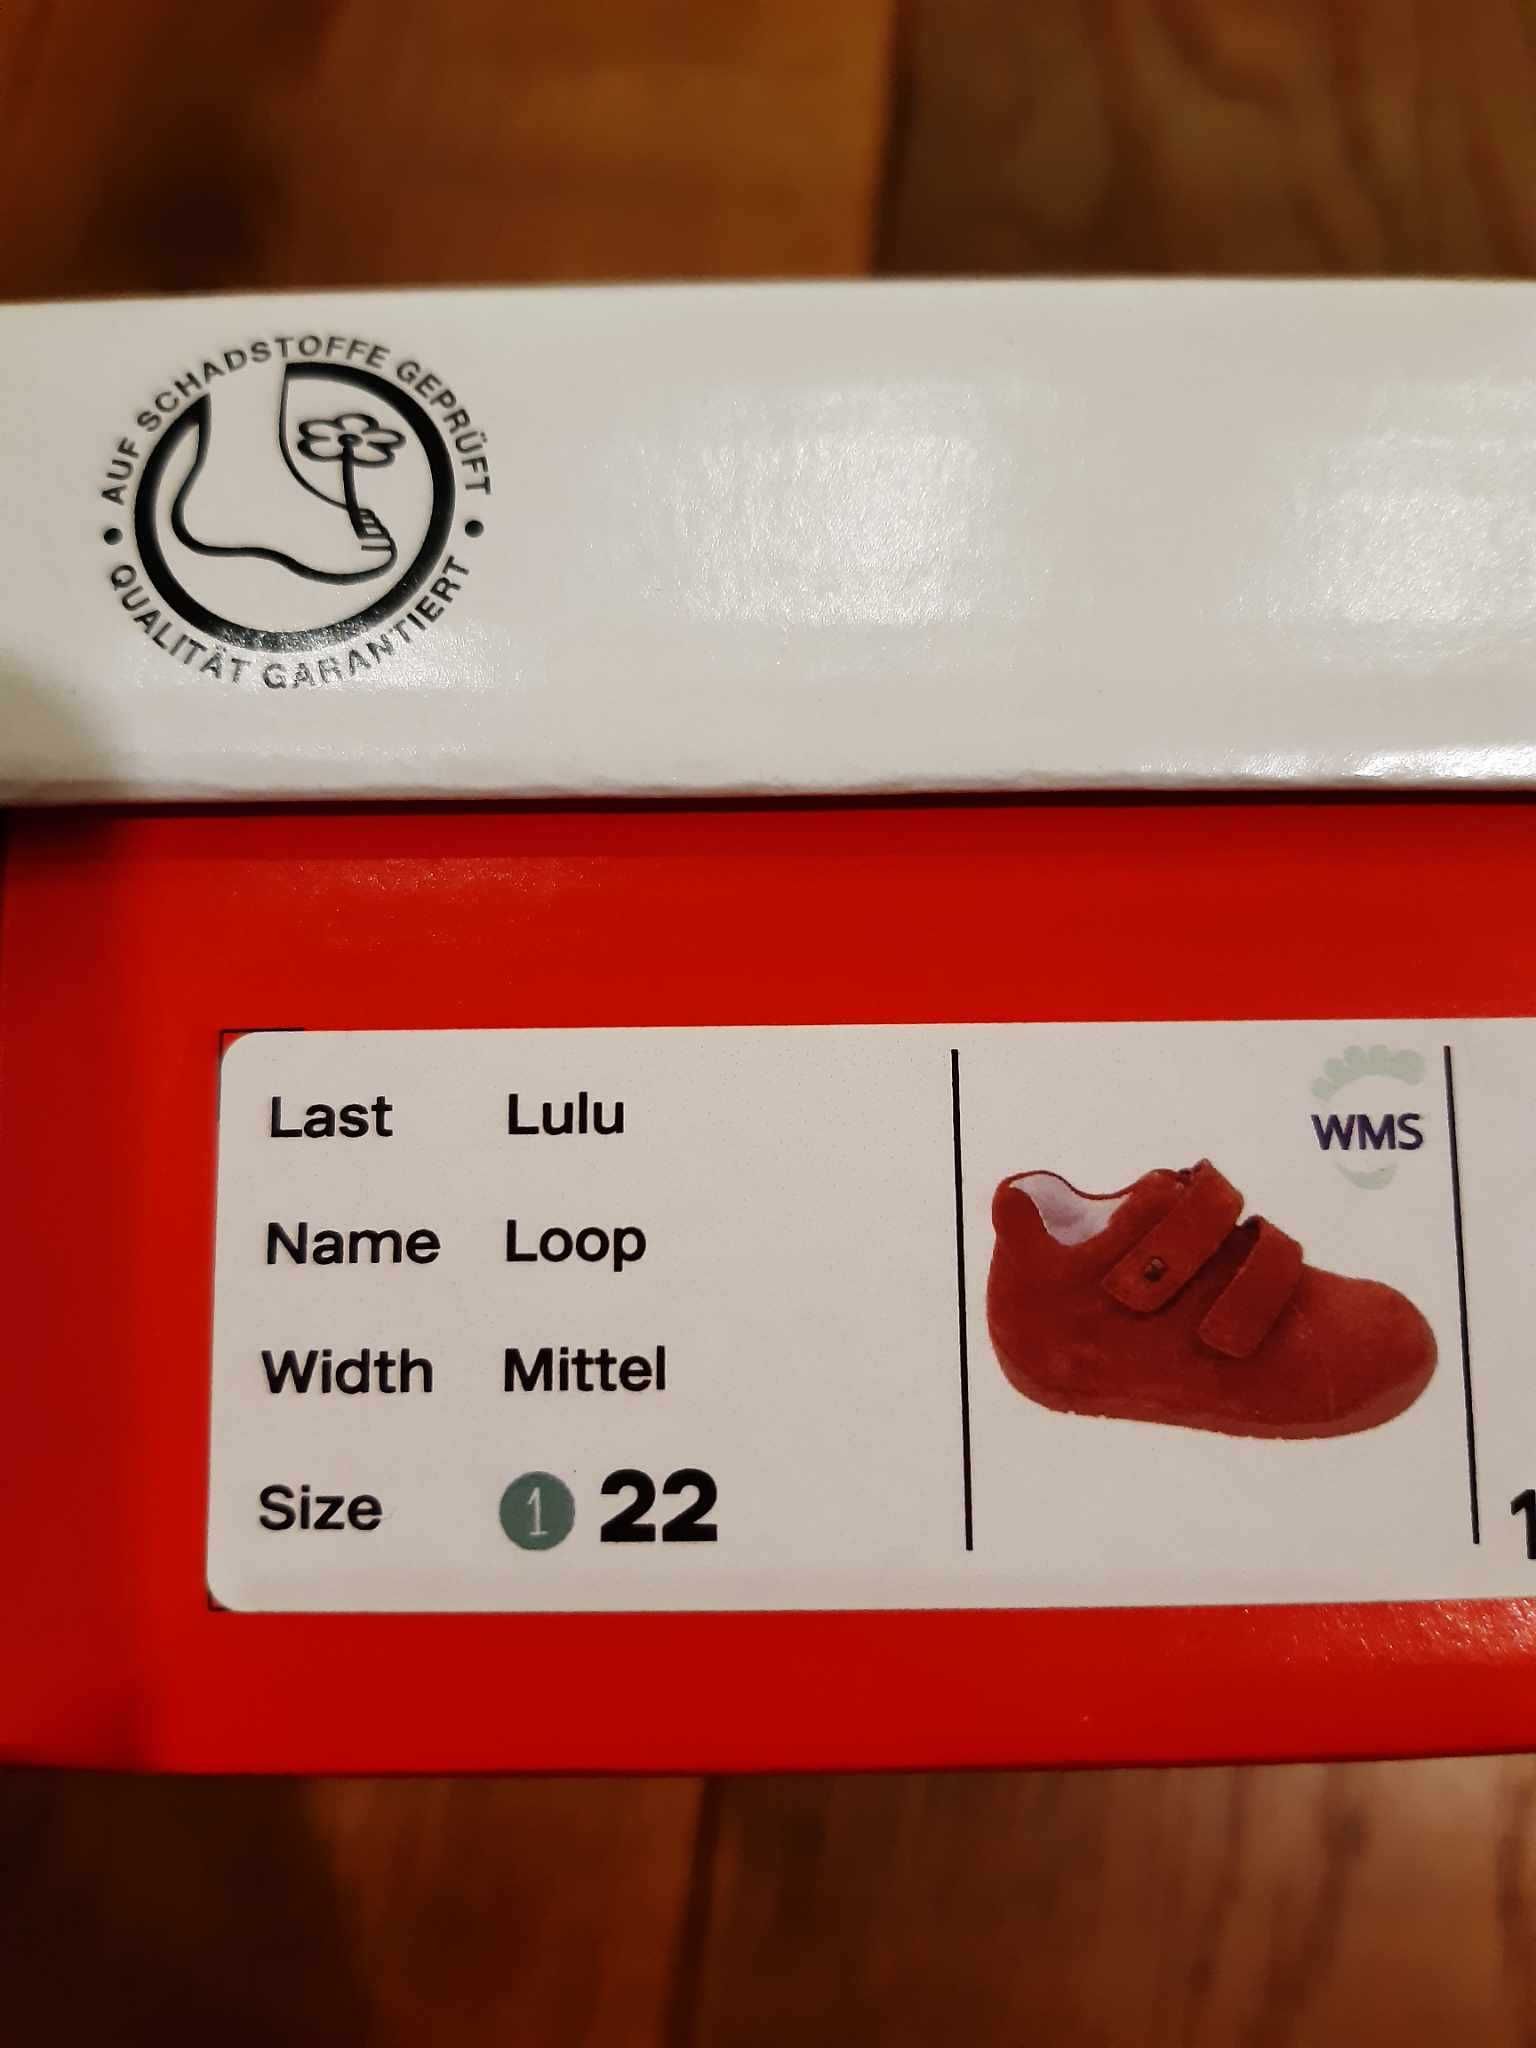 Buty chłopięce Elefanten Lulu Loop Mittel rozmiar 22